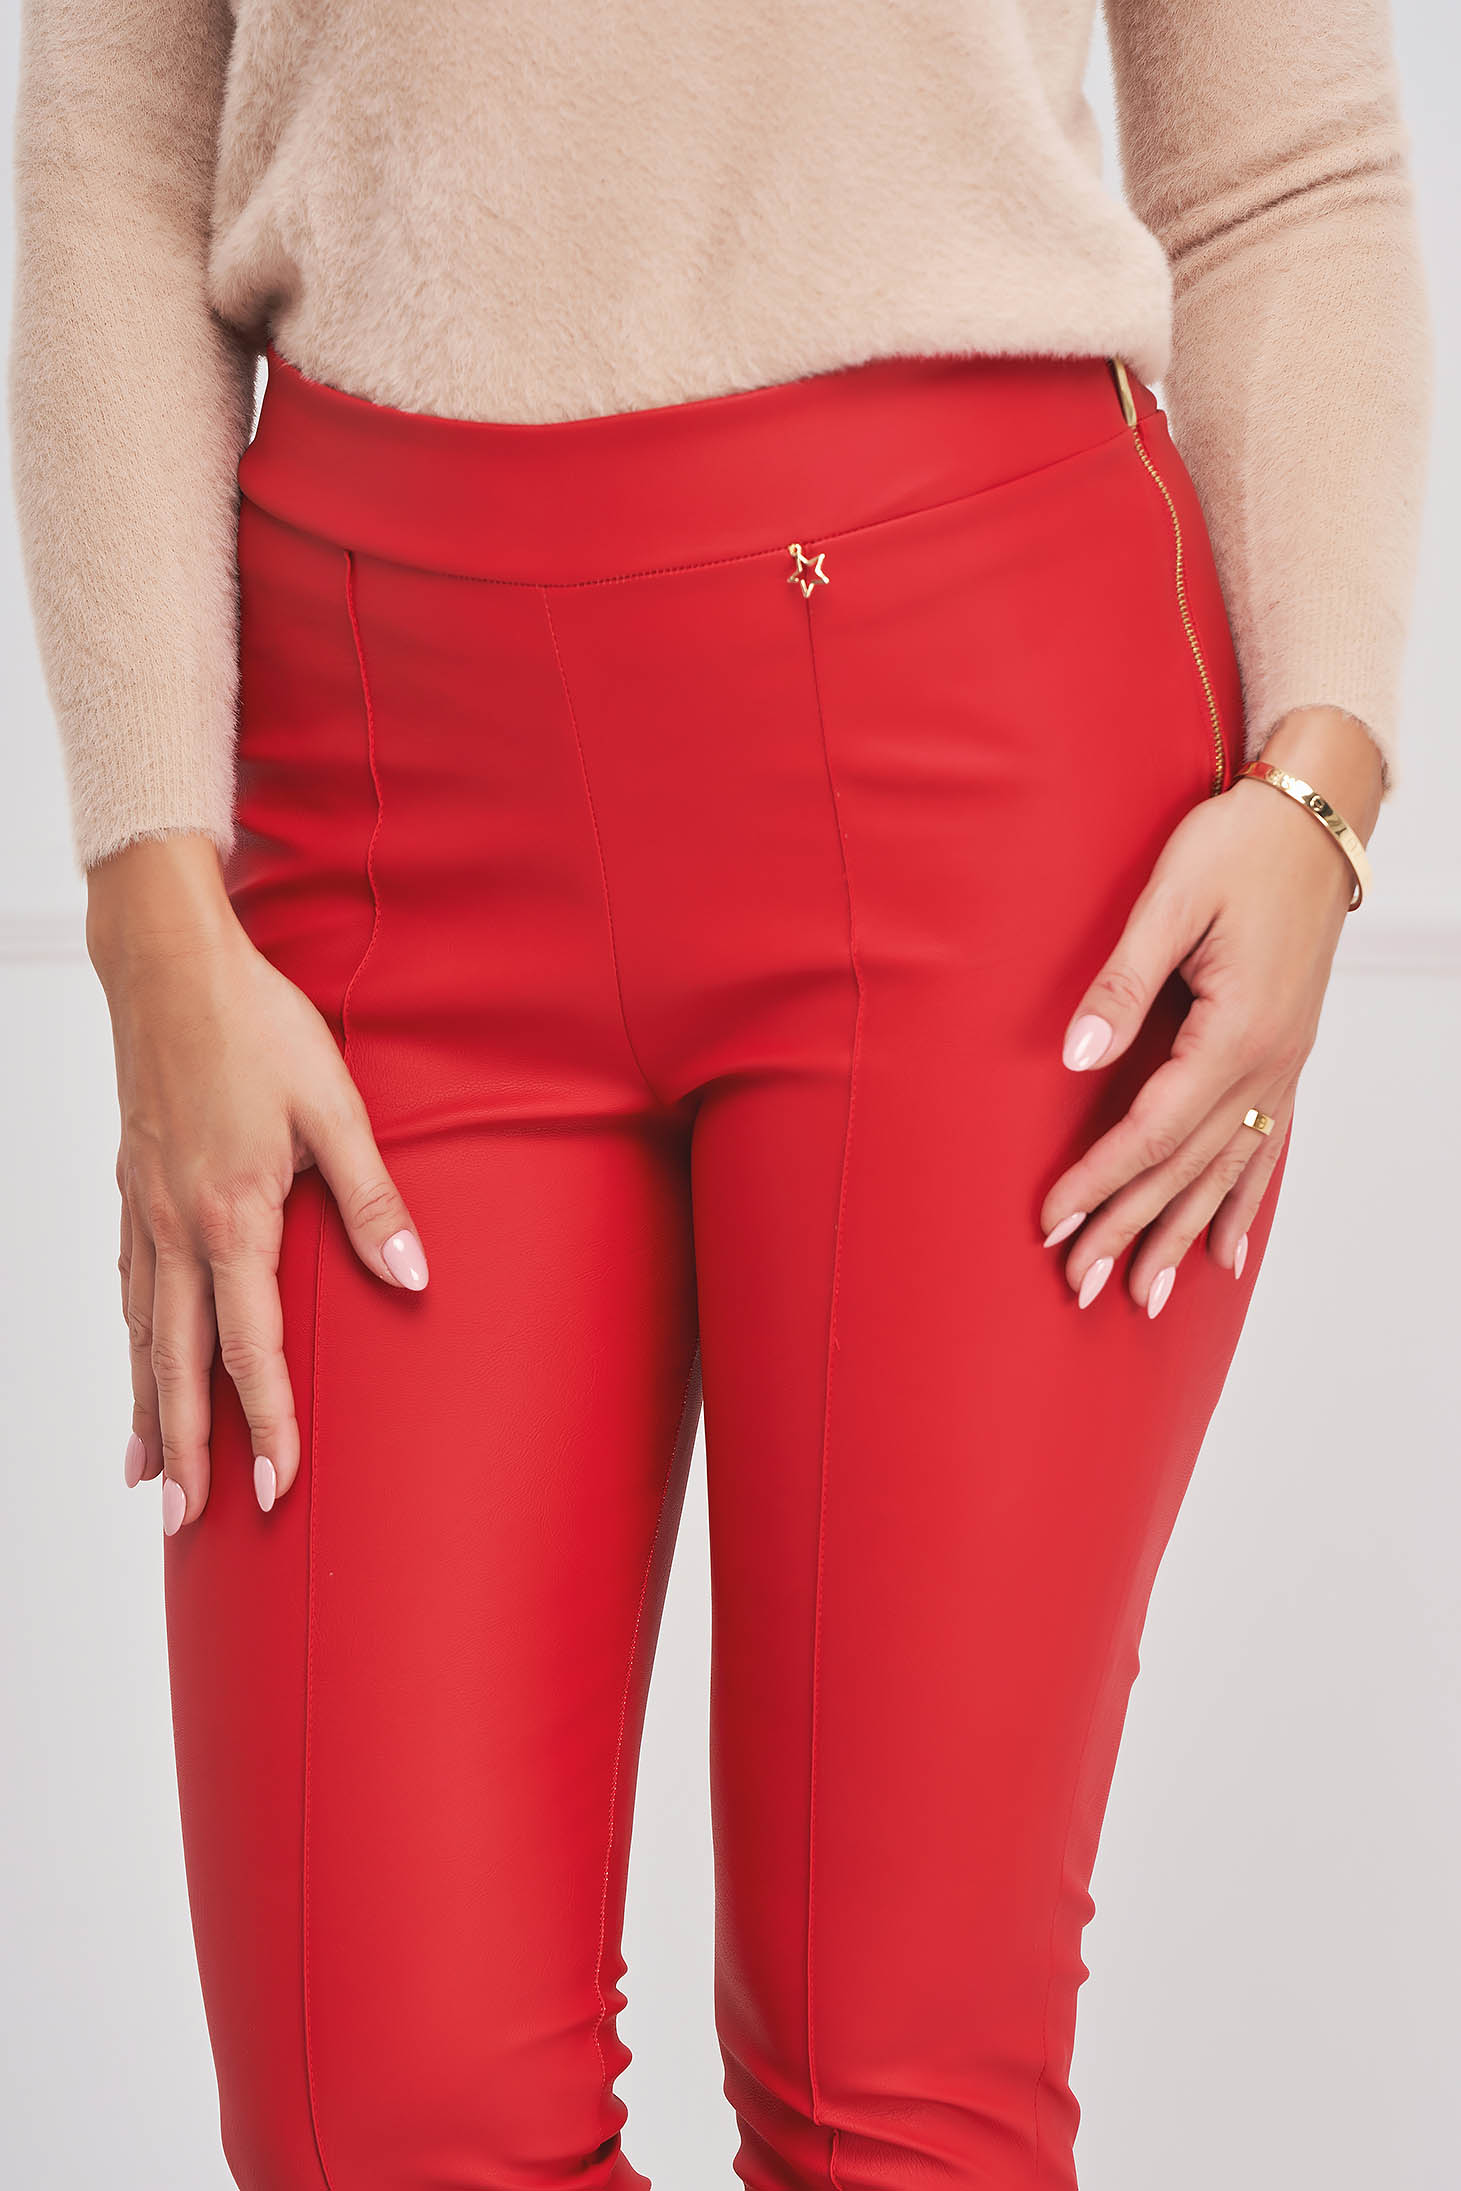 Pantaloni din piele ecologica rosii conici cu talie inalta - StarShinerS 4 - StarShinerS.ro